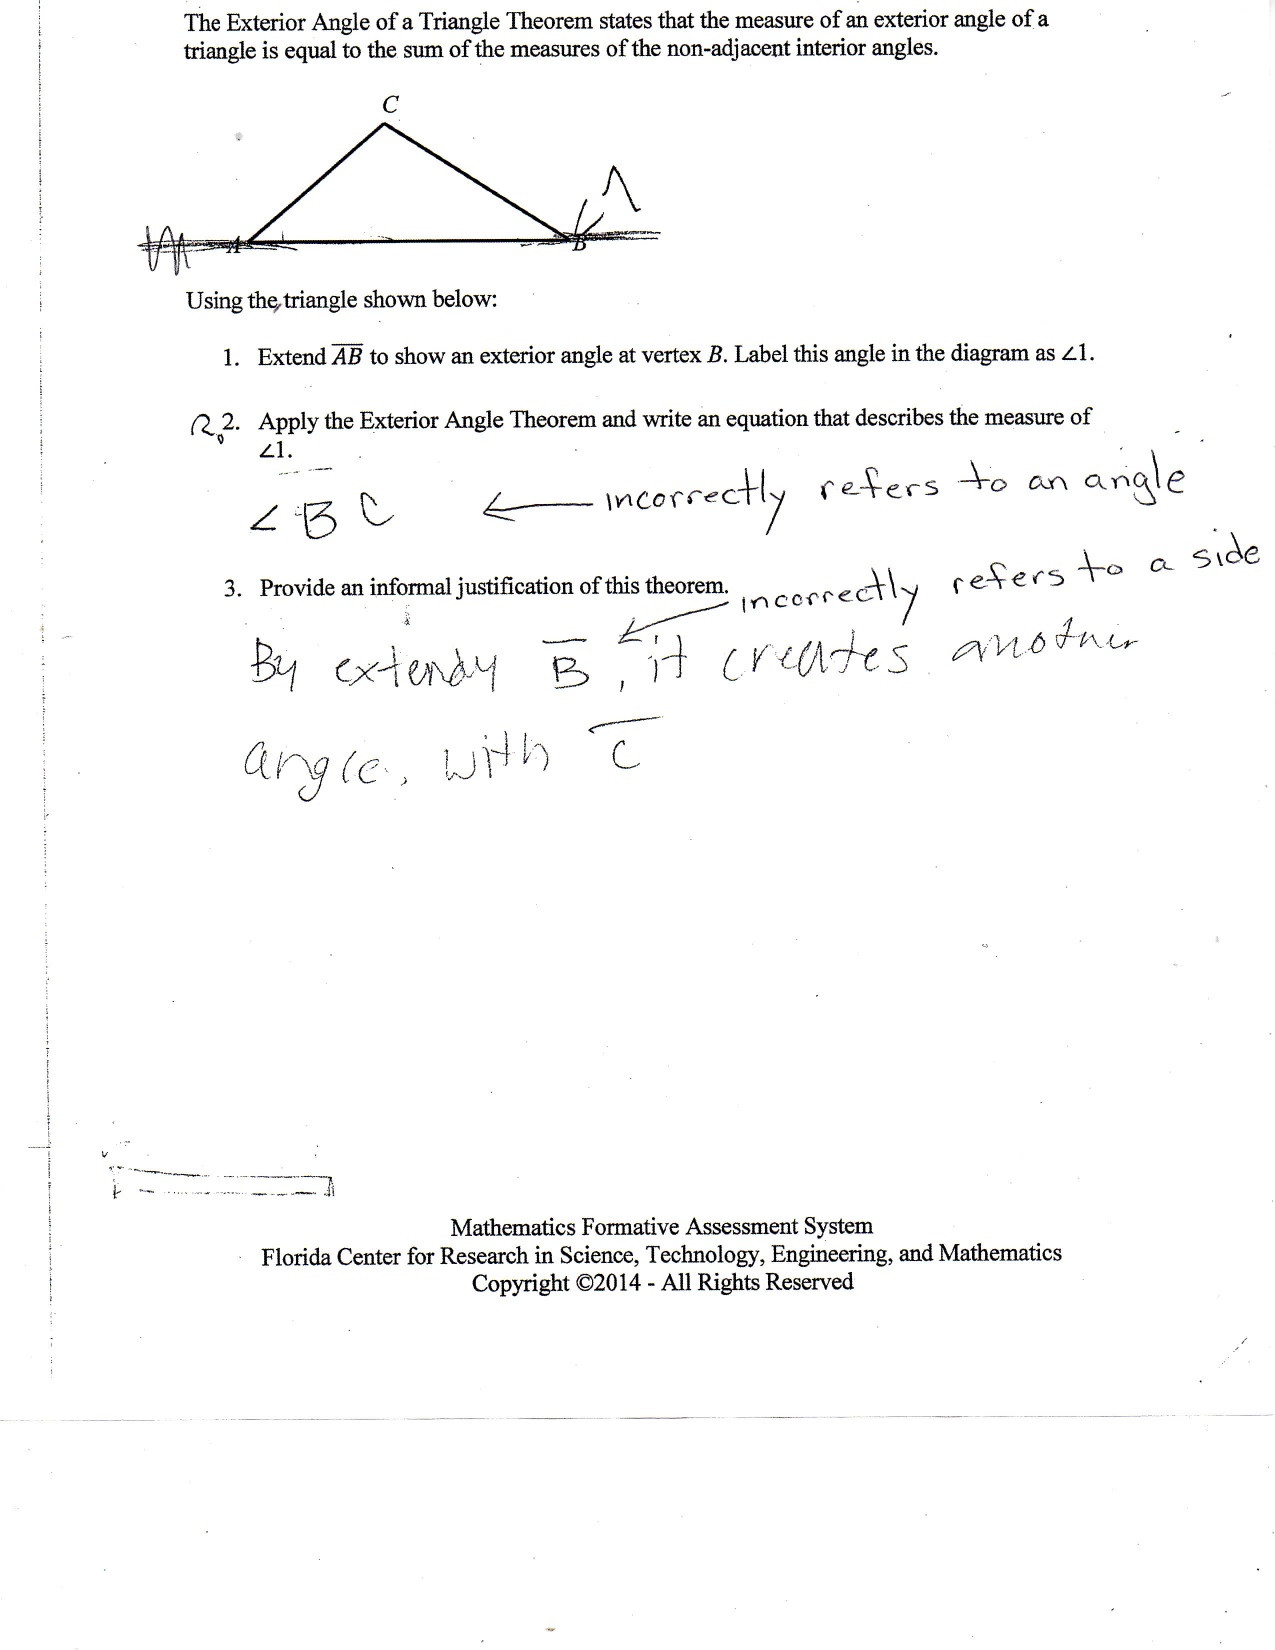 Exterior Angle theorem Worksheet Justifying the Exterior Angle Of A Triangle theorem Students